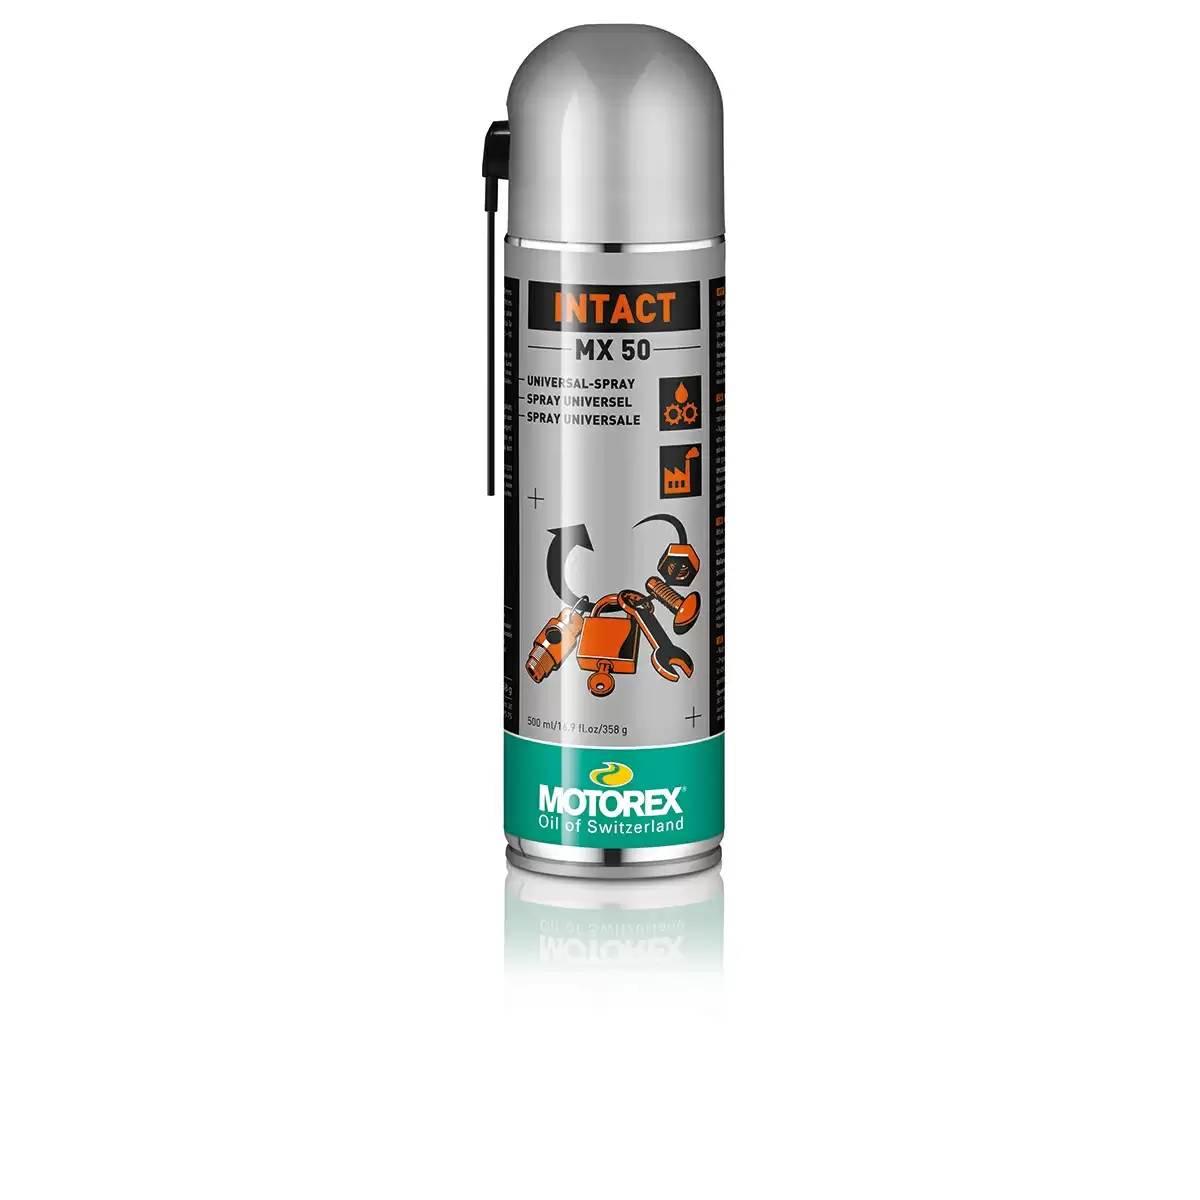 Spray Lube Intact MX50 Aerosol antioxidante repelente al agua 500ml - image